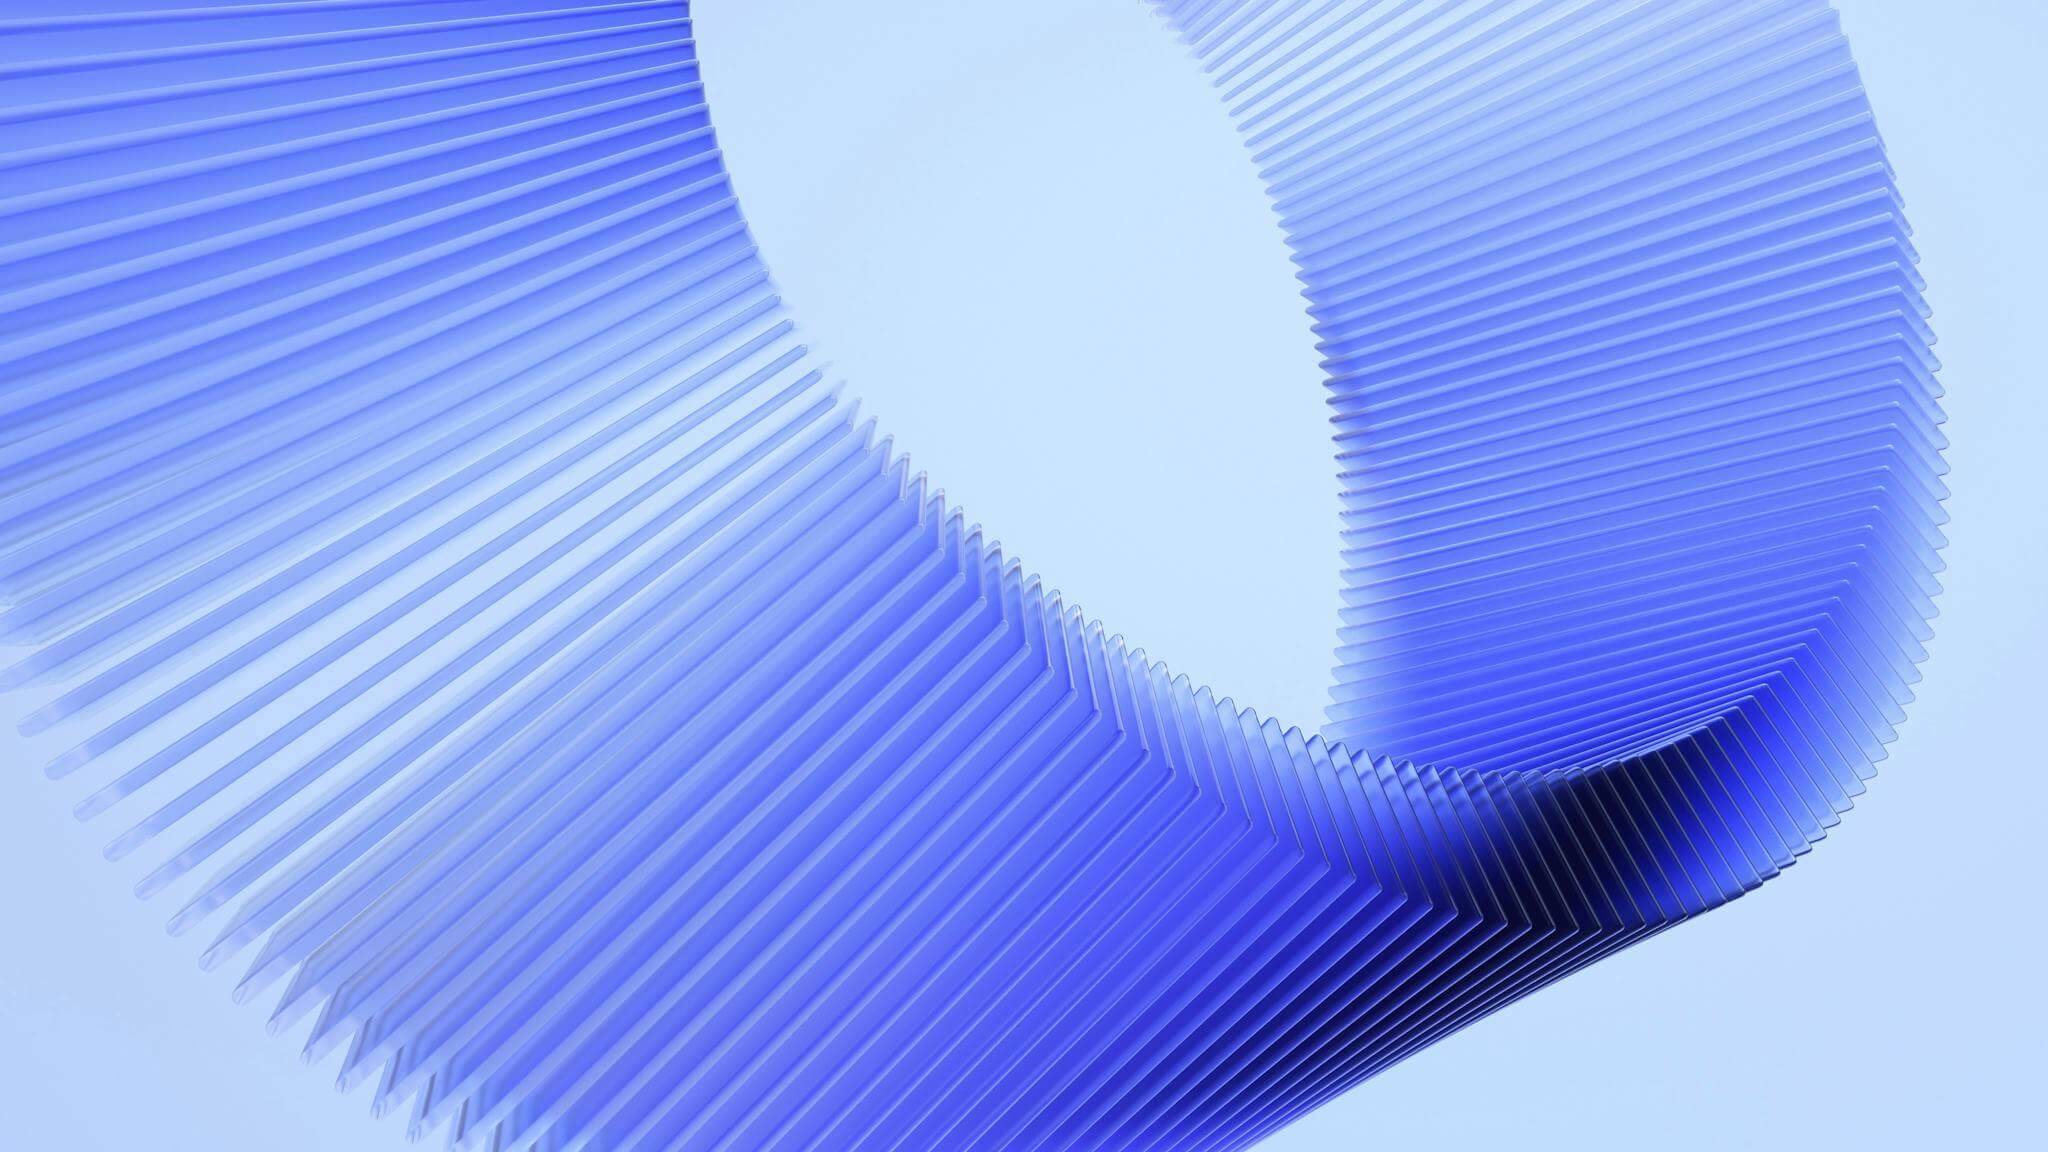 A blue circular 3d object on a light blue background